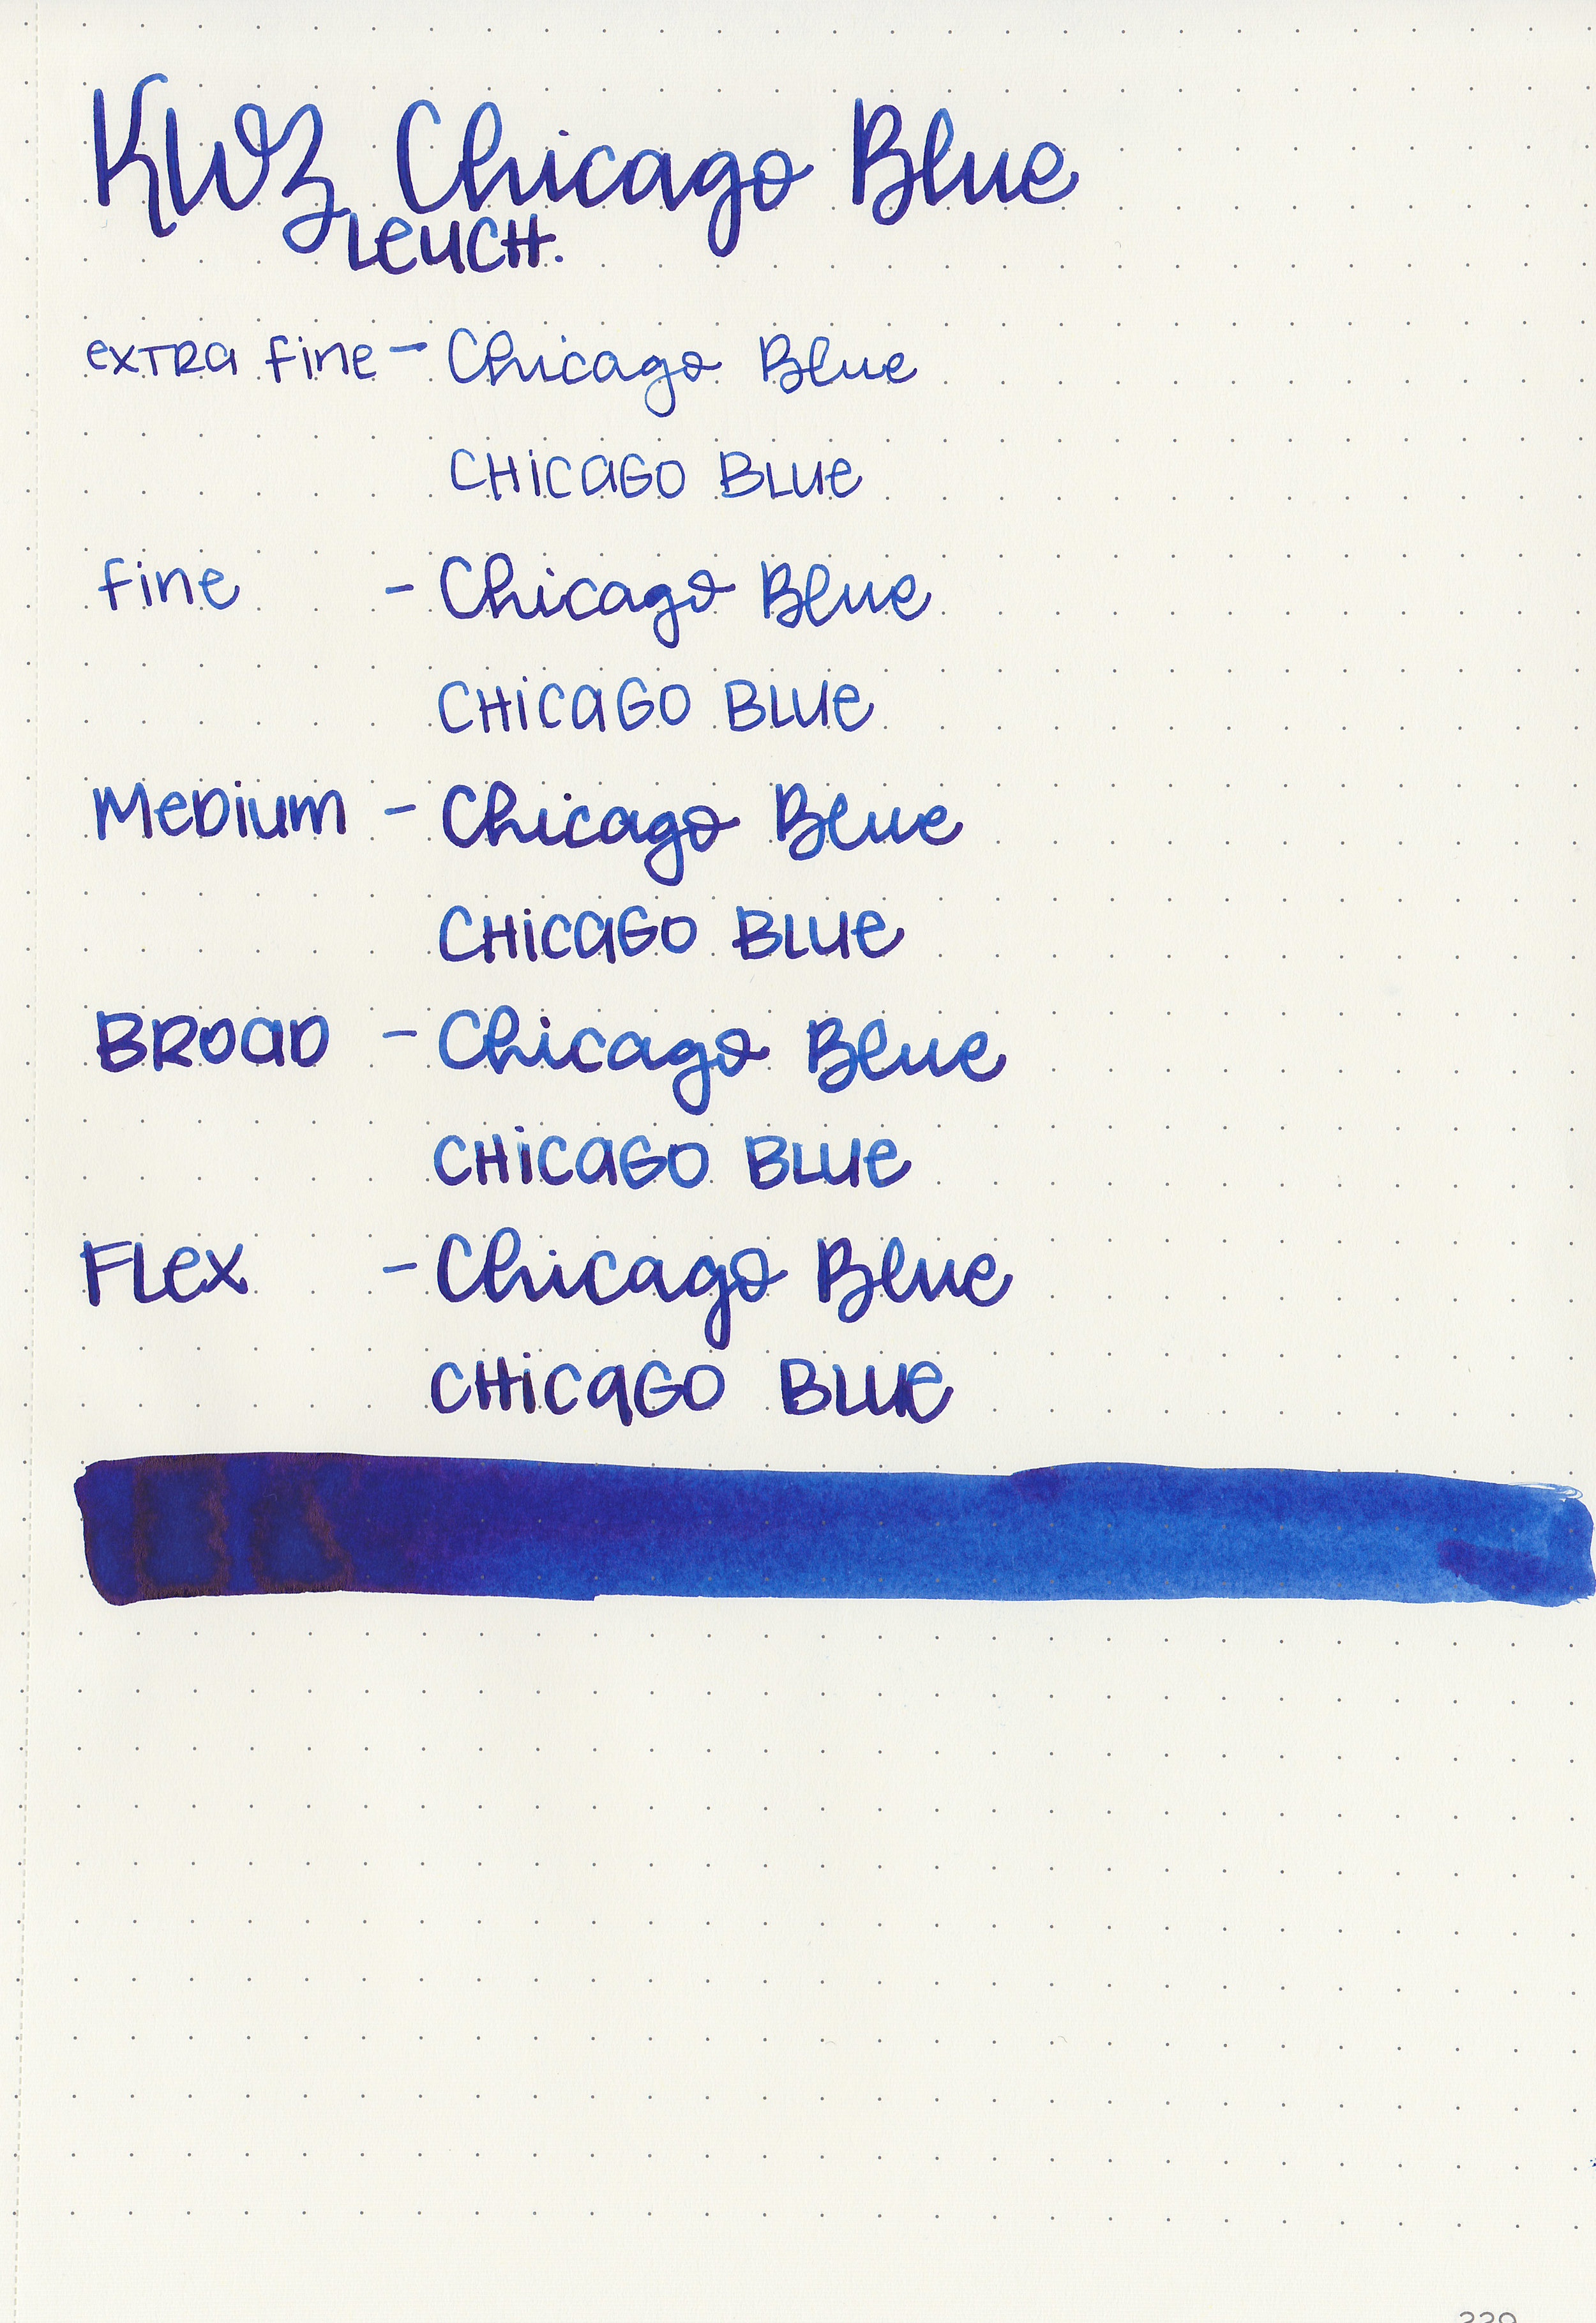 kwz-chicago-blue-9.jpg